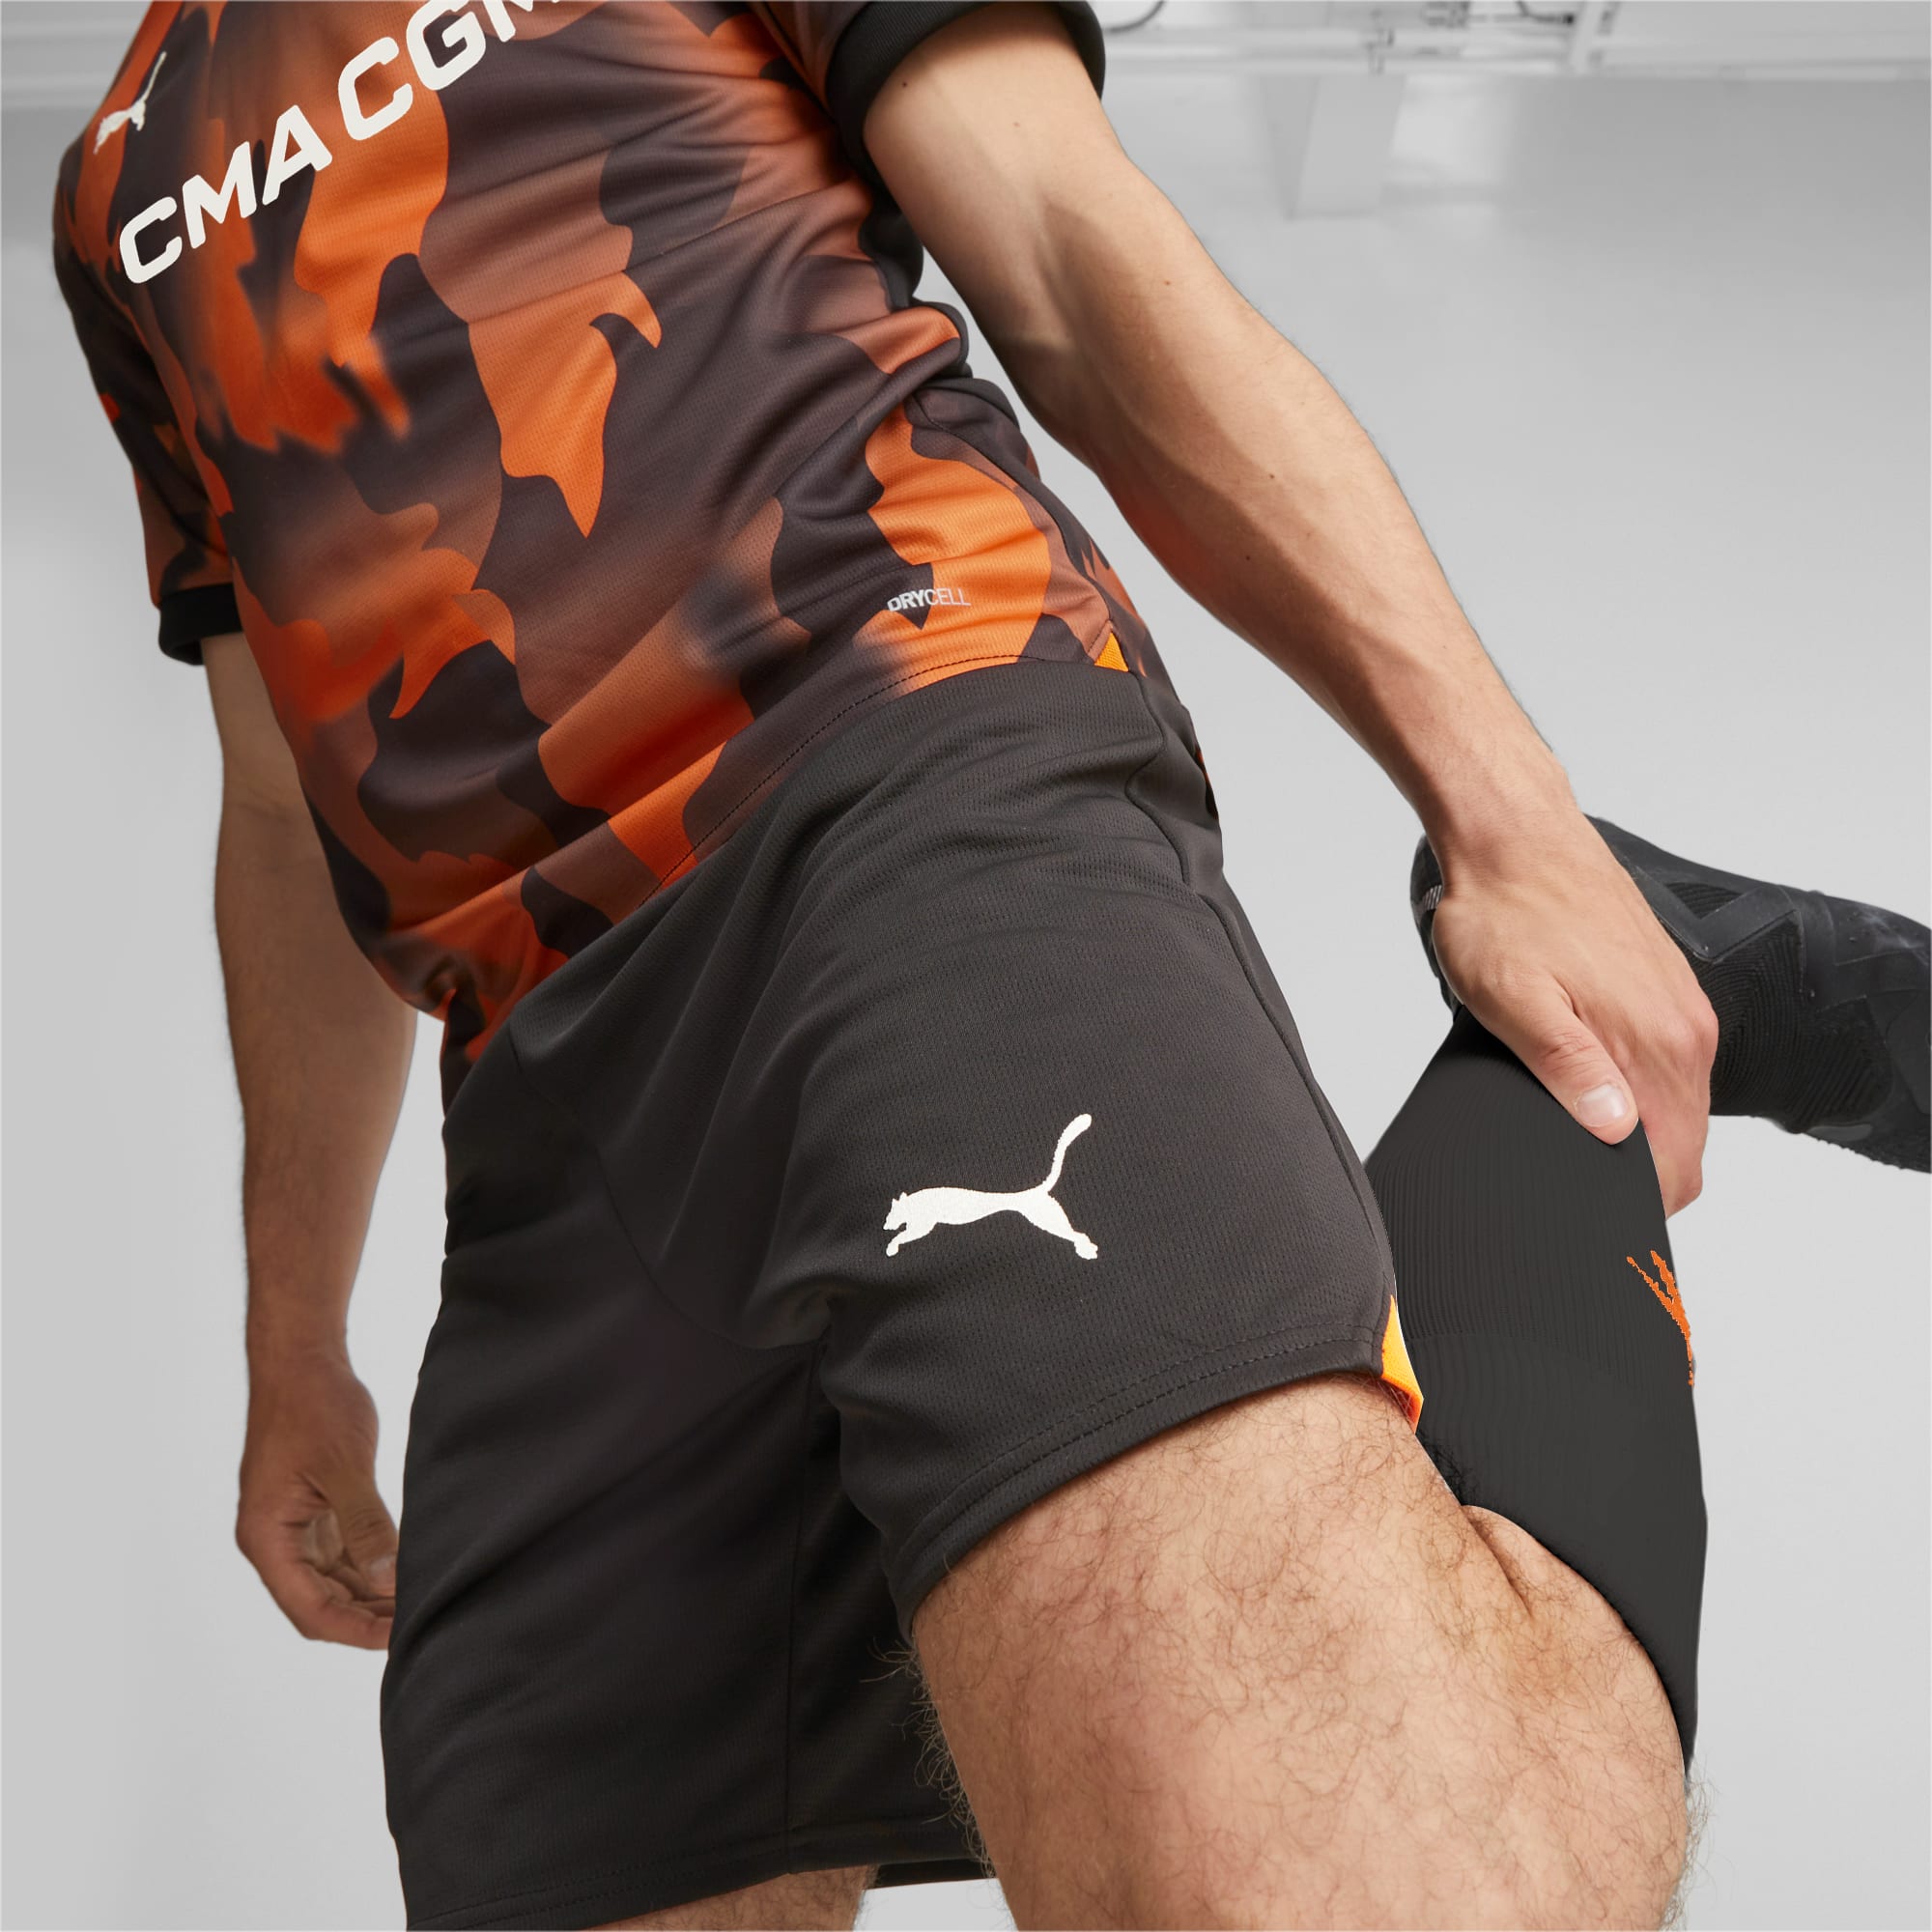 Men's PUMA Olympique De Marseille Football Shorts, Black/Rickie Orange, Size L, Clothing